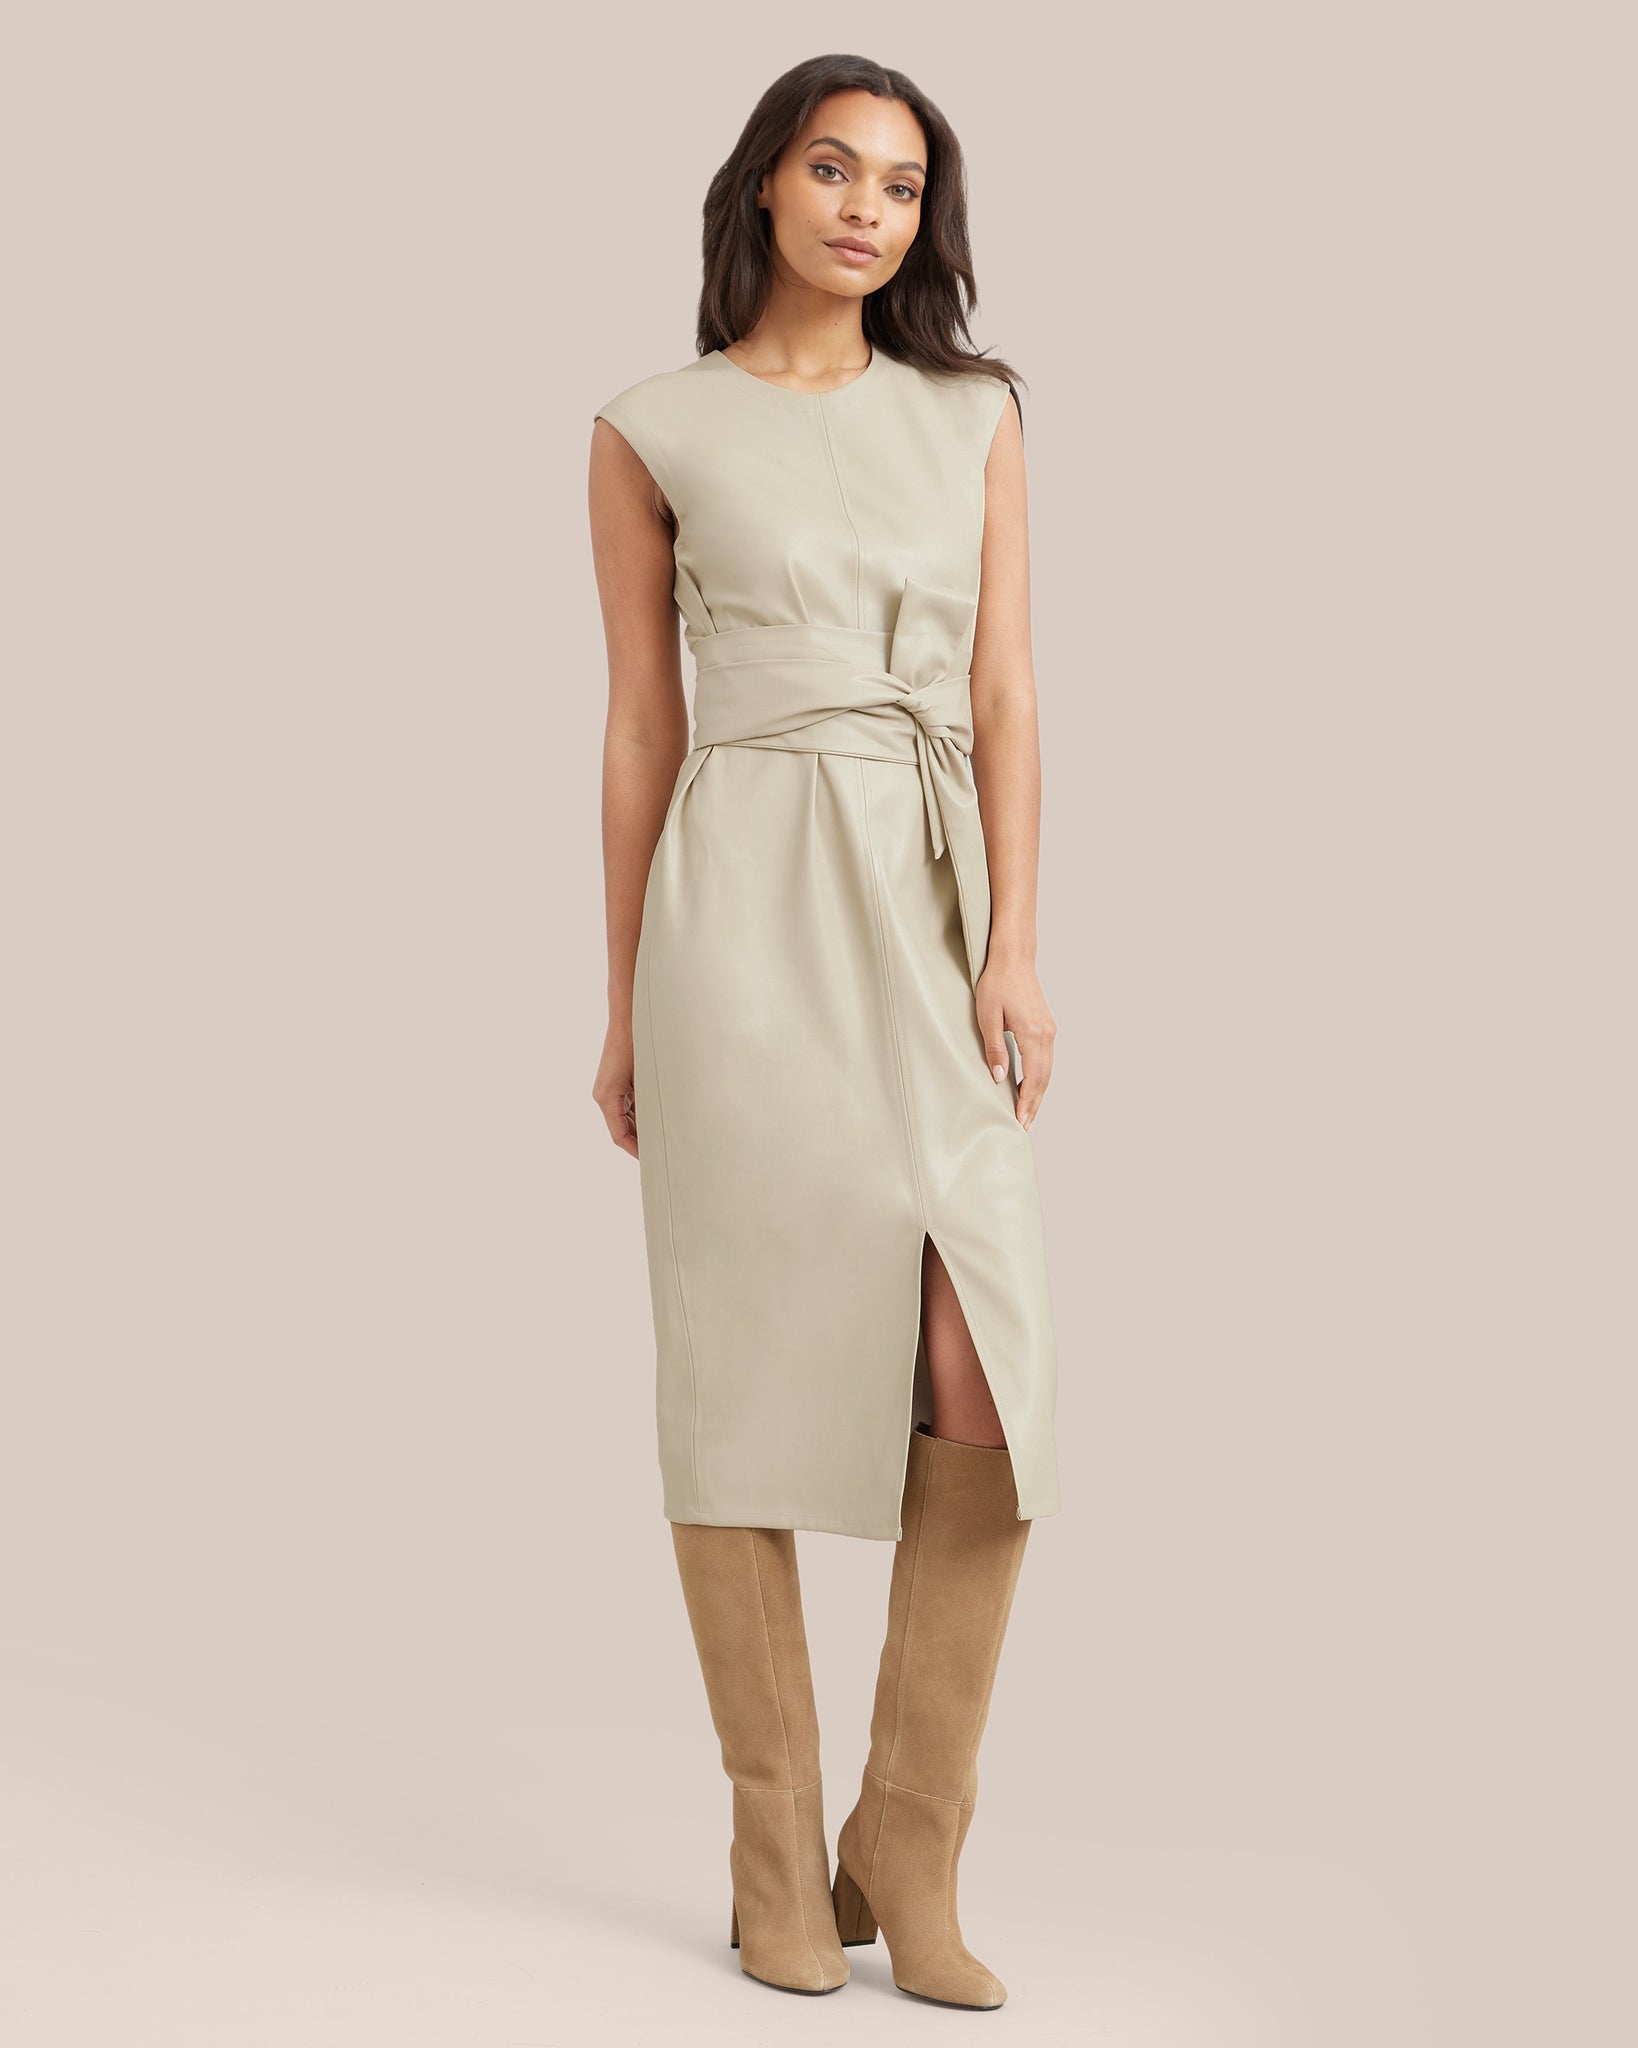 Sophia l Pilar Vegan Leather Tie-Front Dress in Size Small